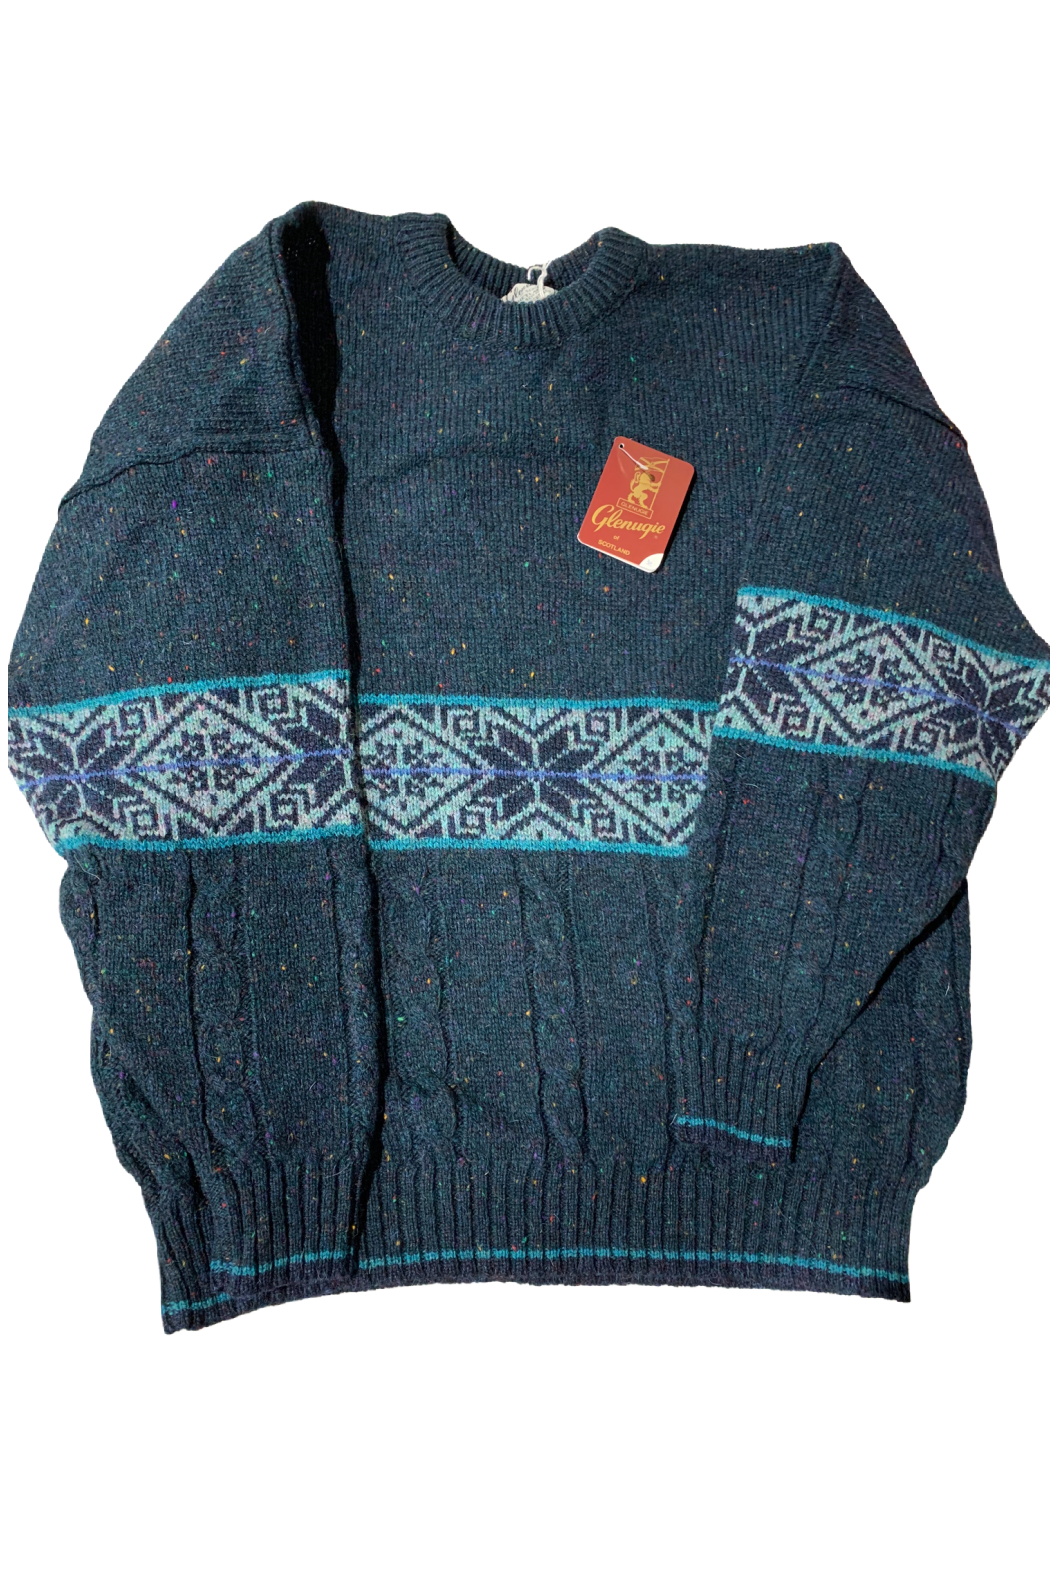 Glenugie Crew Neck Sweater